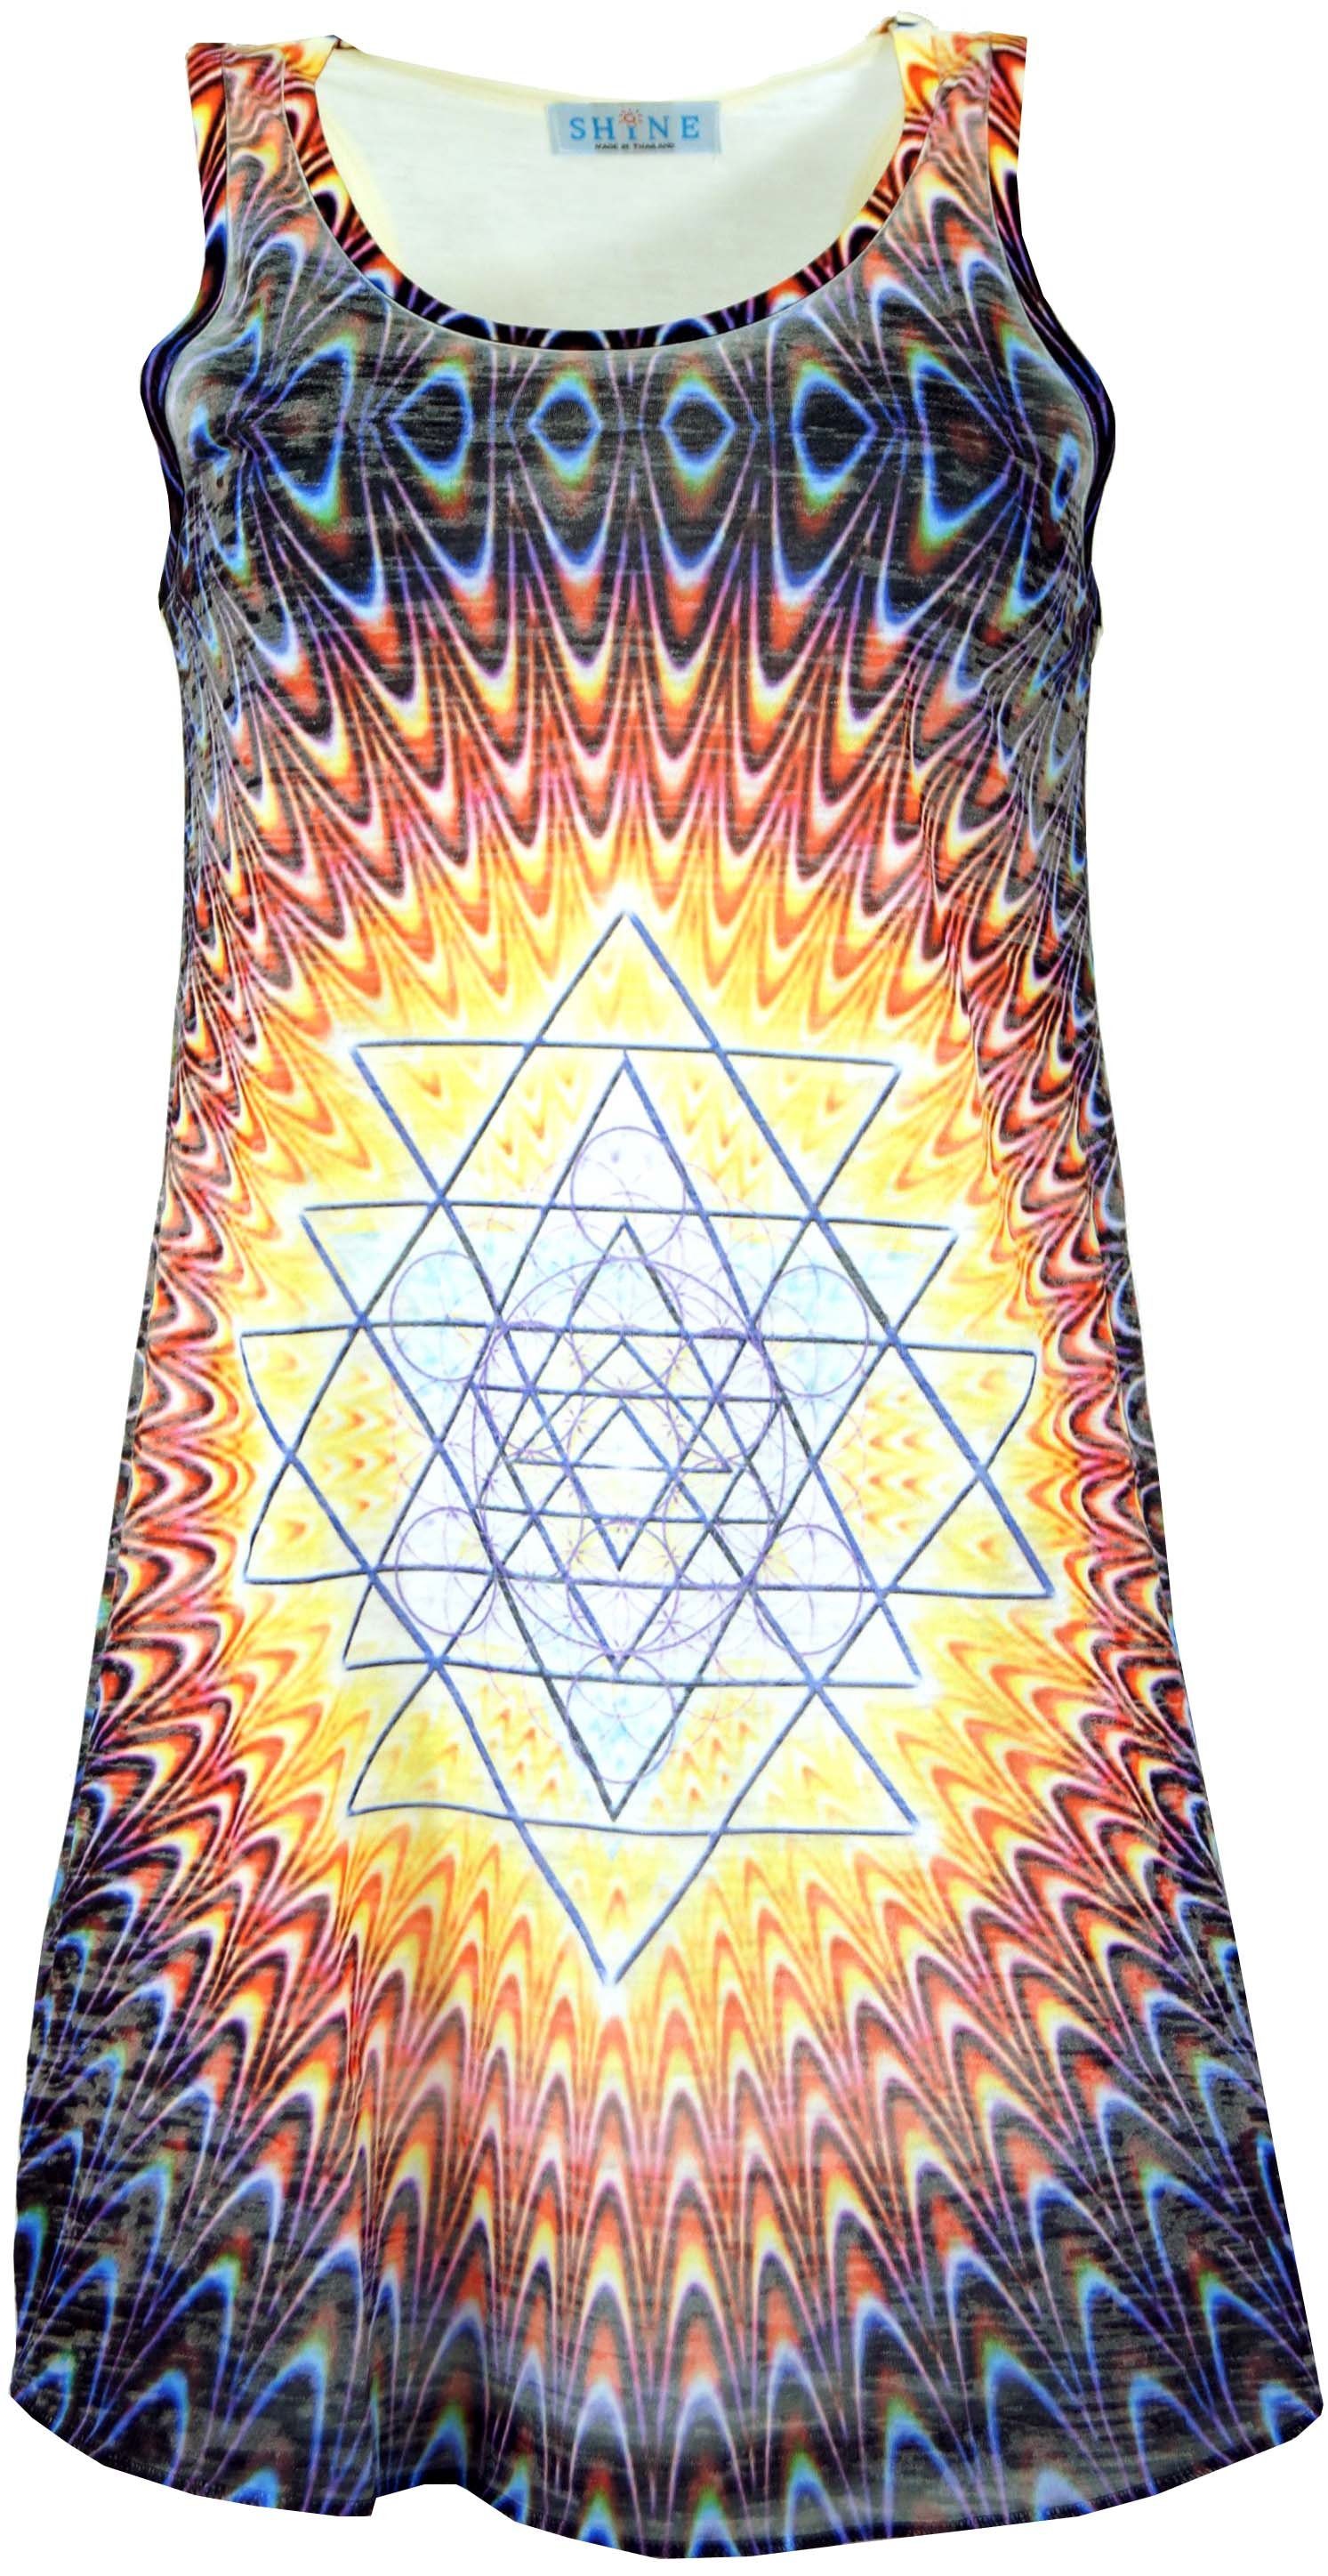 Guru-Shop Midikleid Psytrance Minikleid, Longtop - Shri Yantra alternative Bekleidung